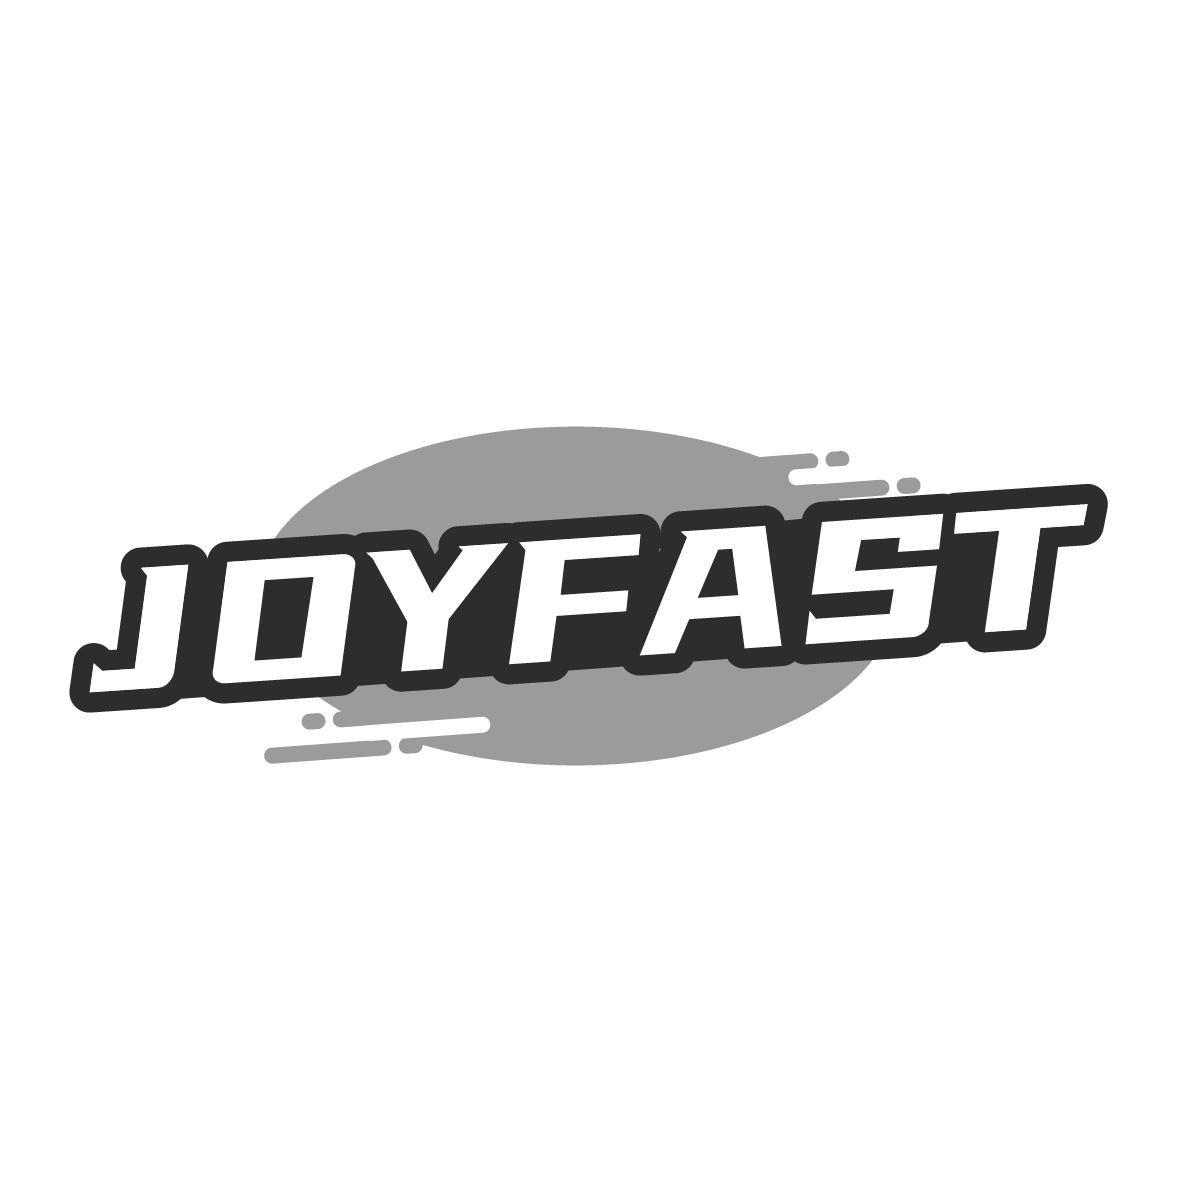 JOYFAST